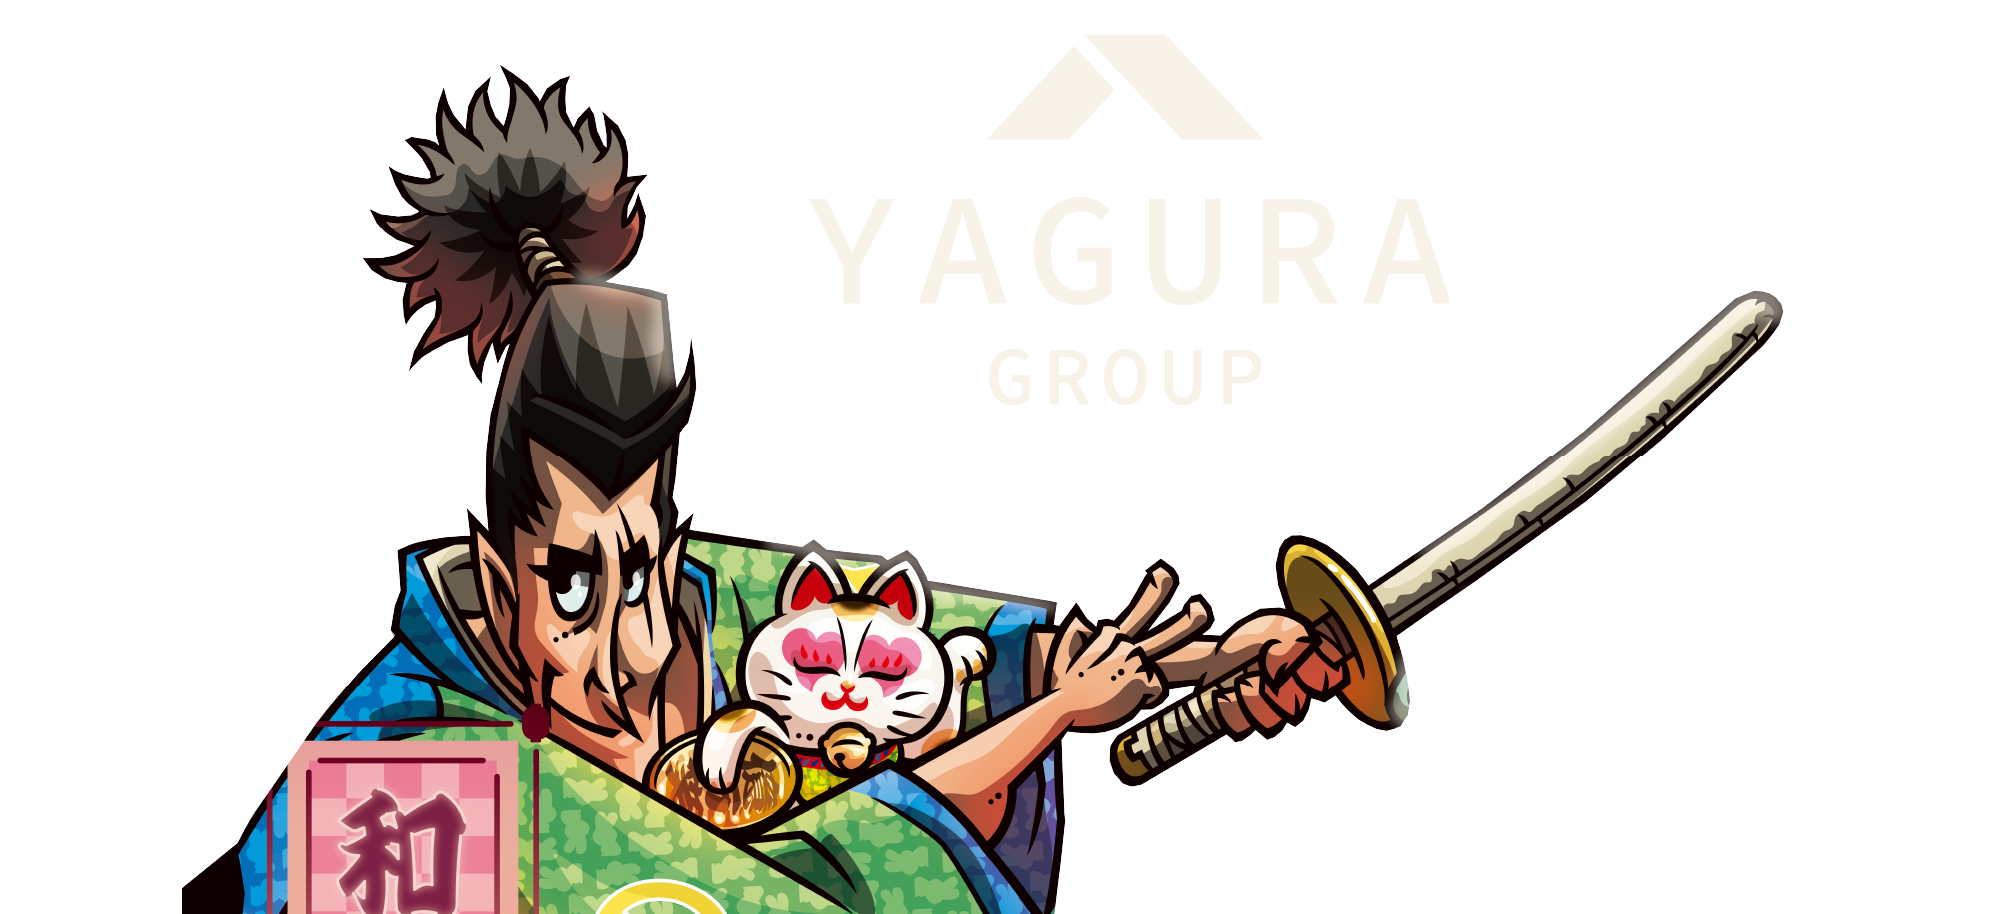 YAGURA GROUP